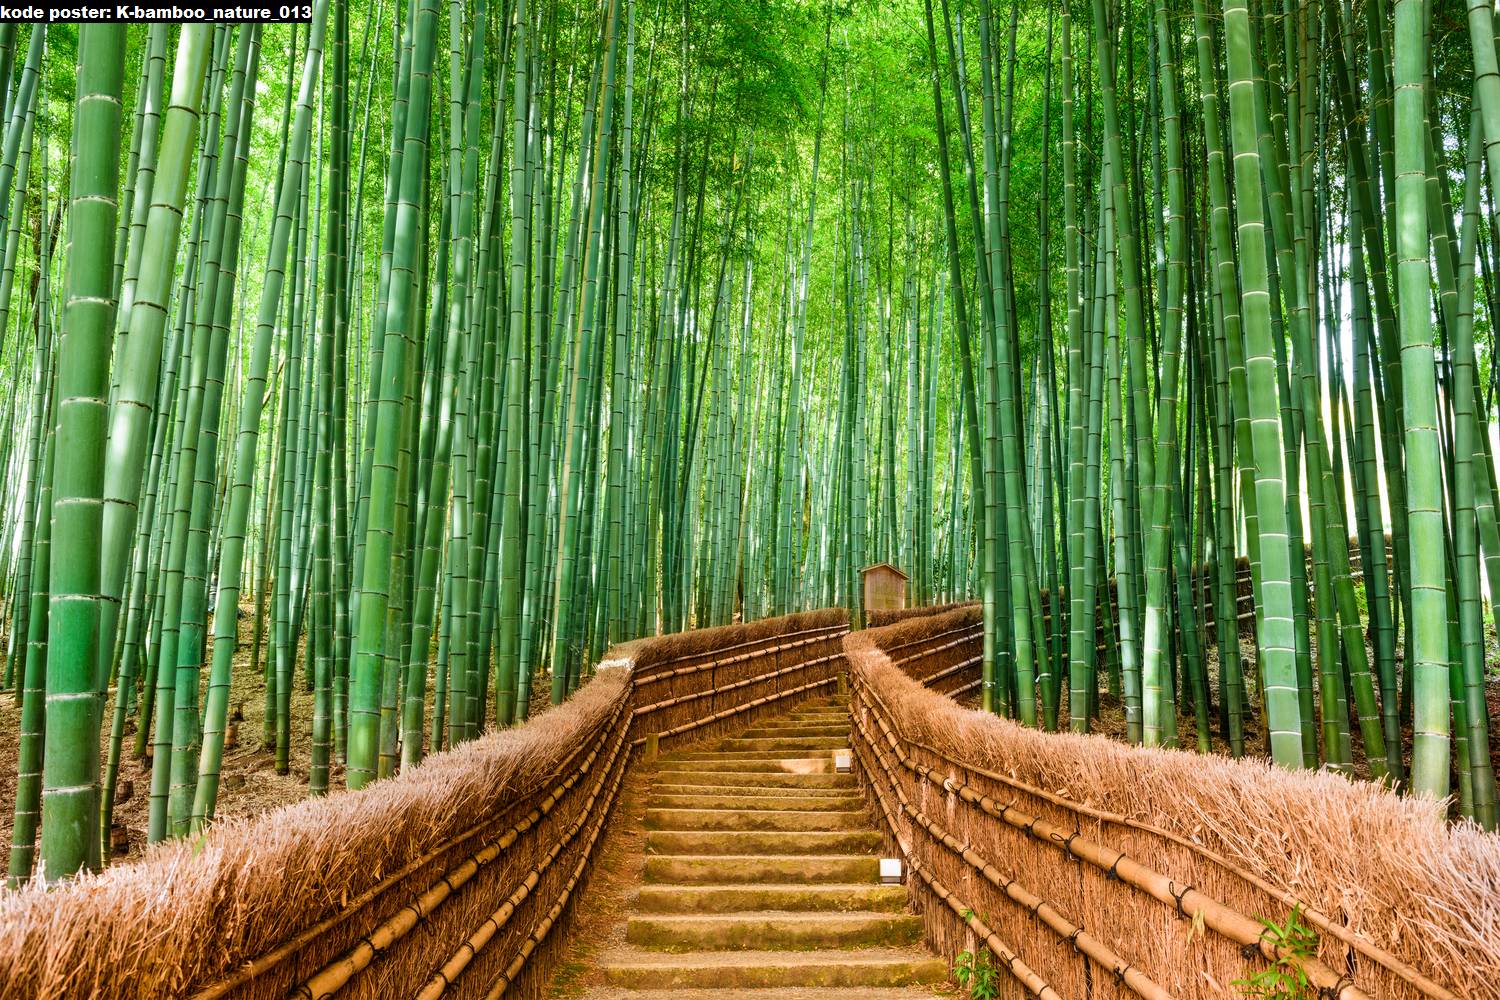 hiasan-dinding-kanvas-pemandangan-alam bamboo-013.